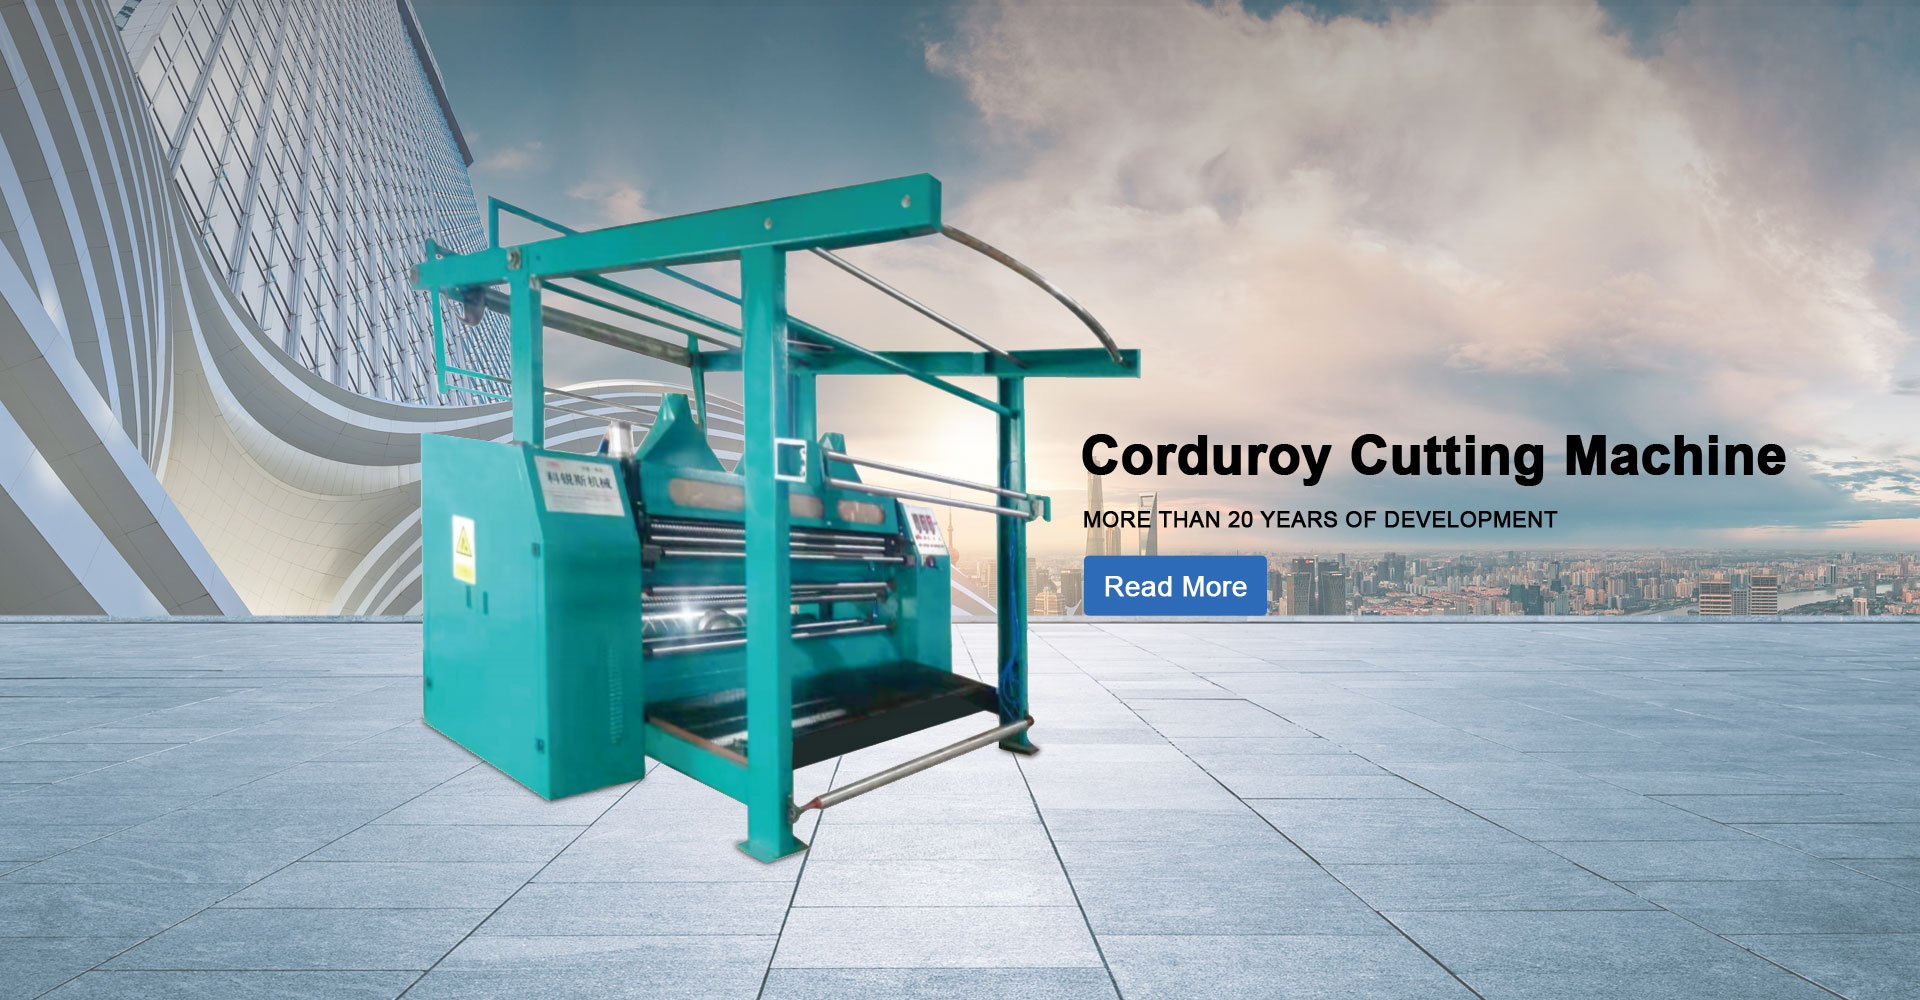 Chinese fabrikanten van corduroy-snijmachines